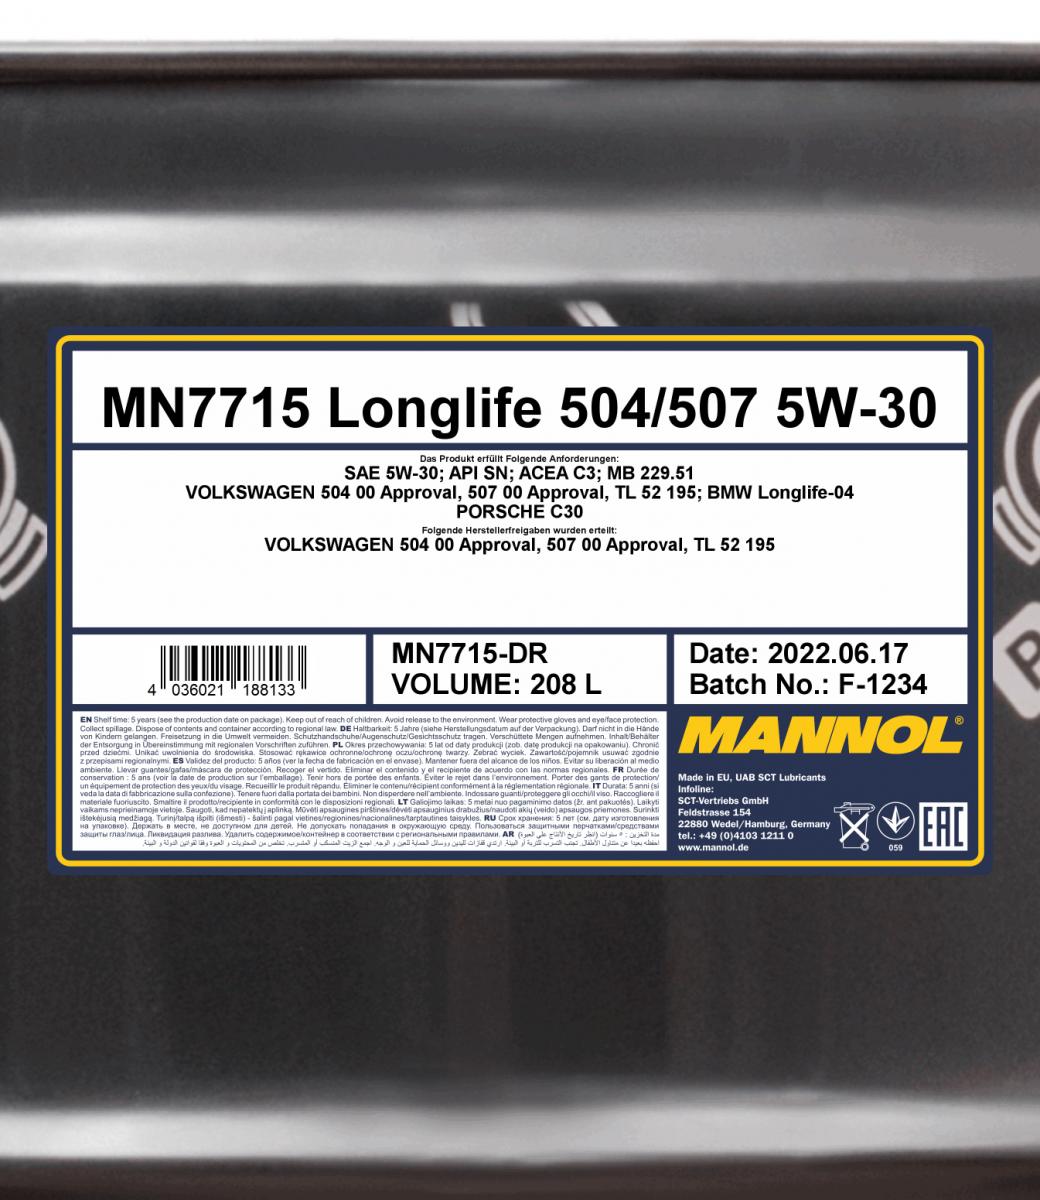 208l Mannol 7715 Motoröl Longlife 504/507 5W-30, 5W-30, Motoröl